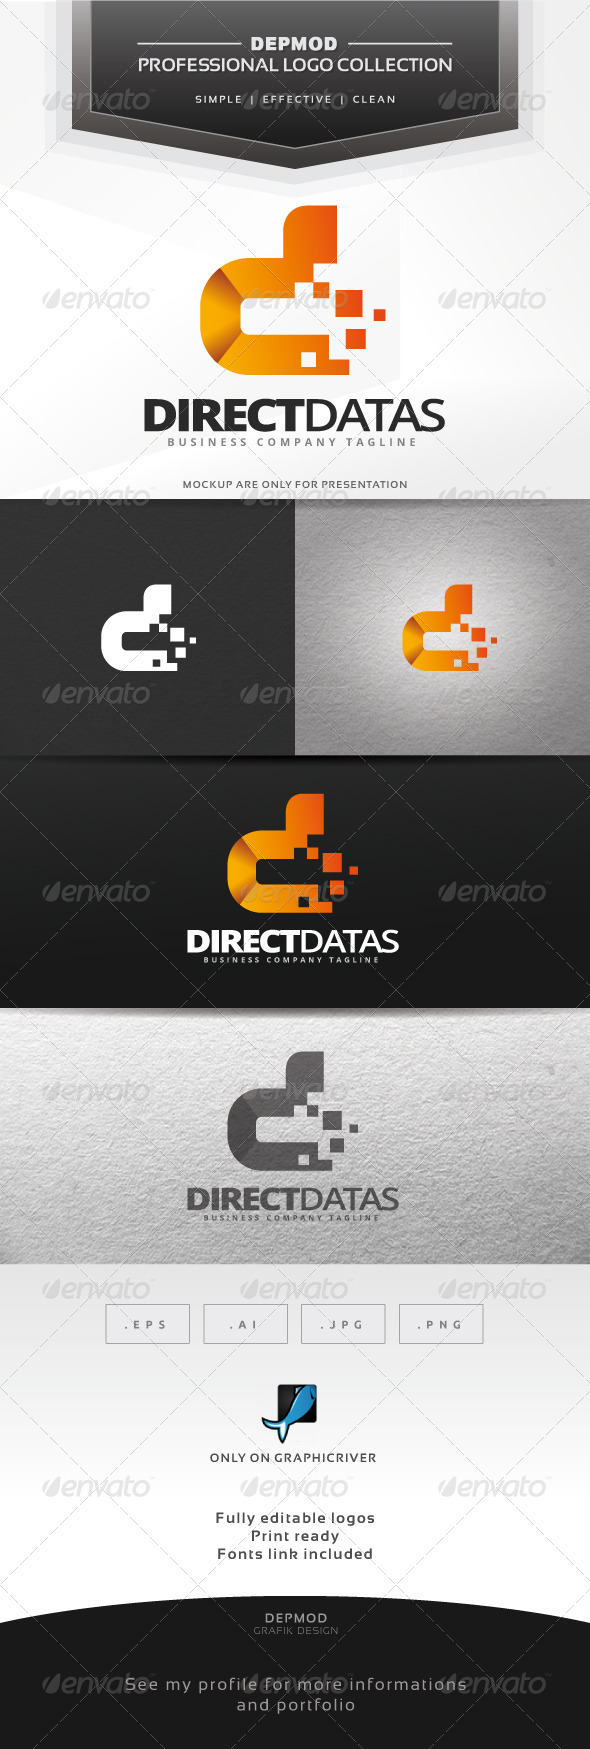 Direct Datas Logo